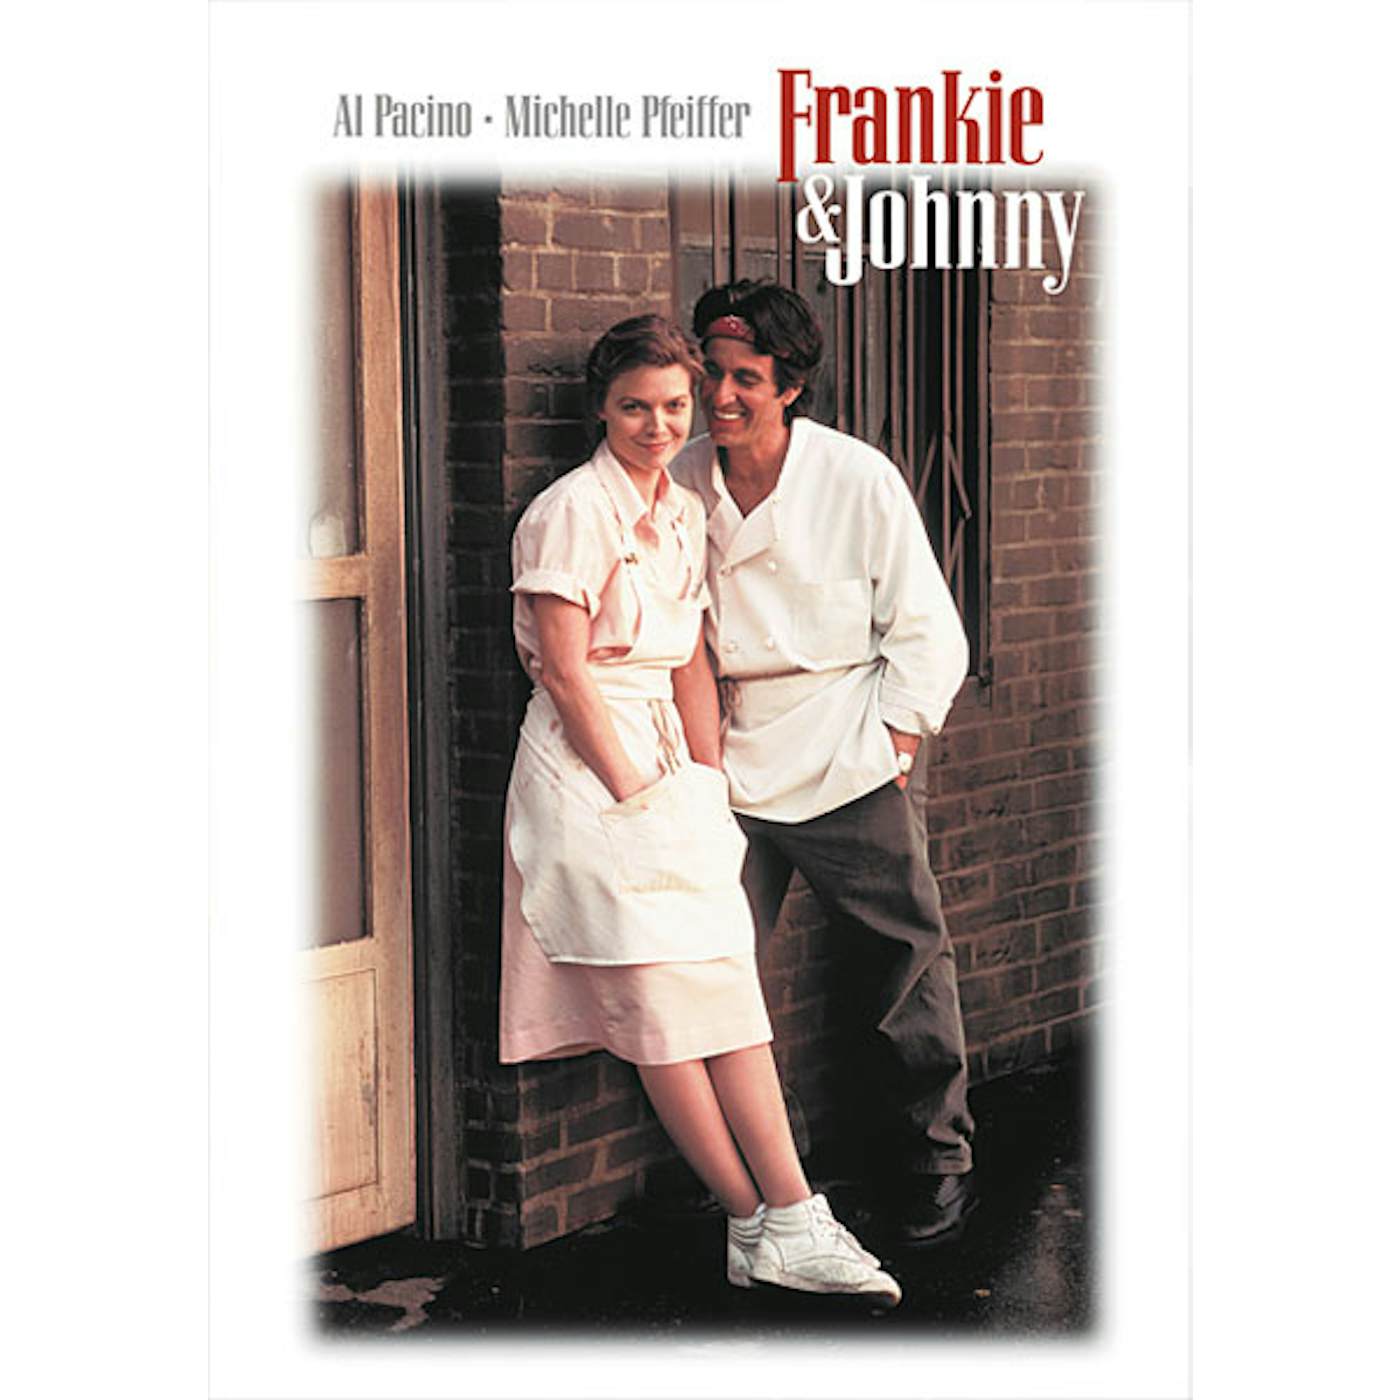 FRANKIE & JOHNNY DVD